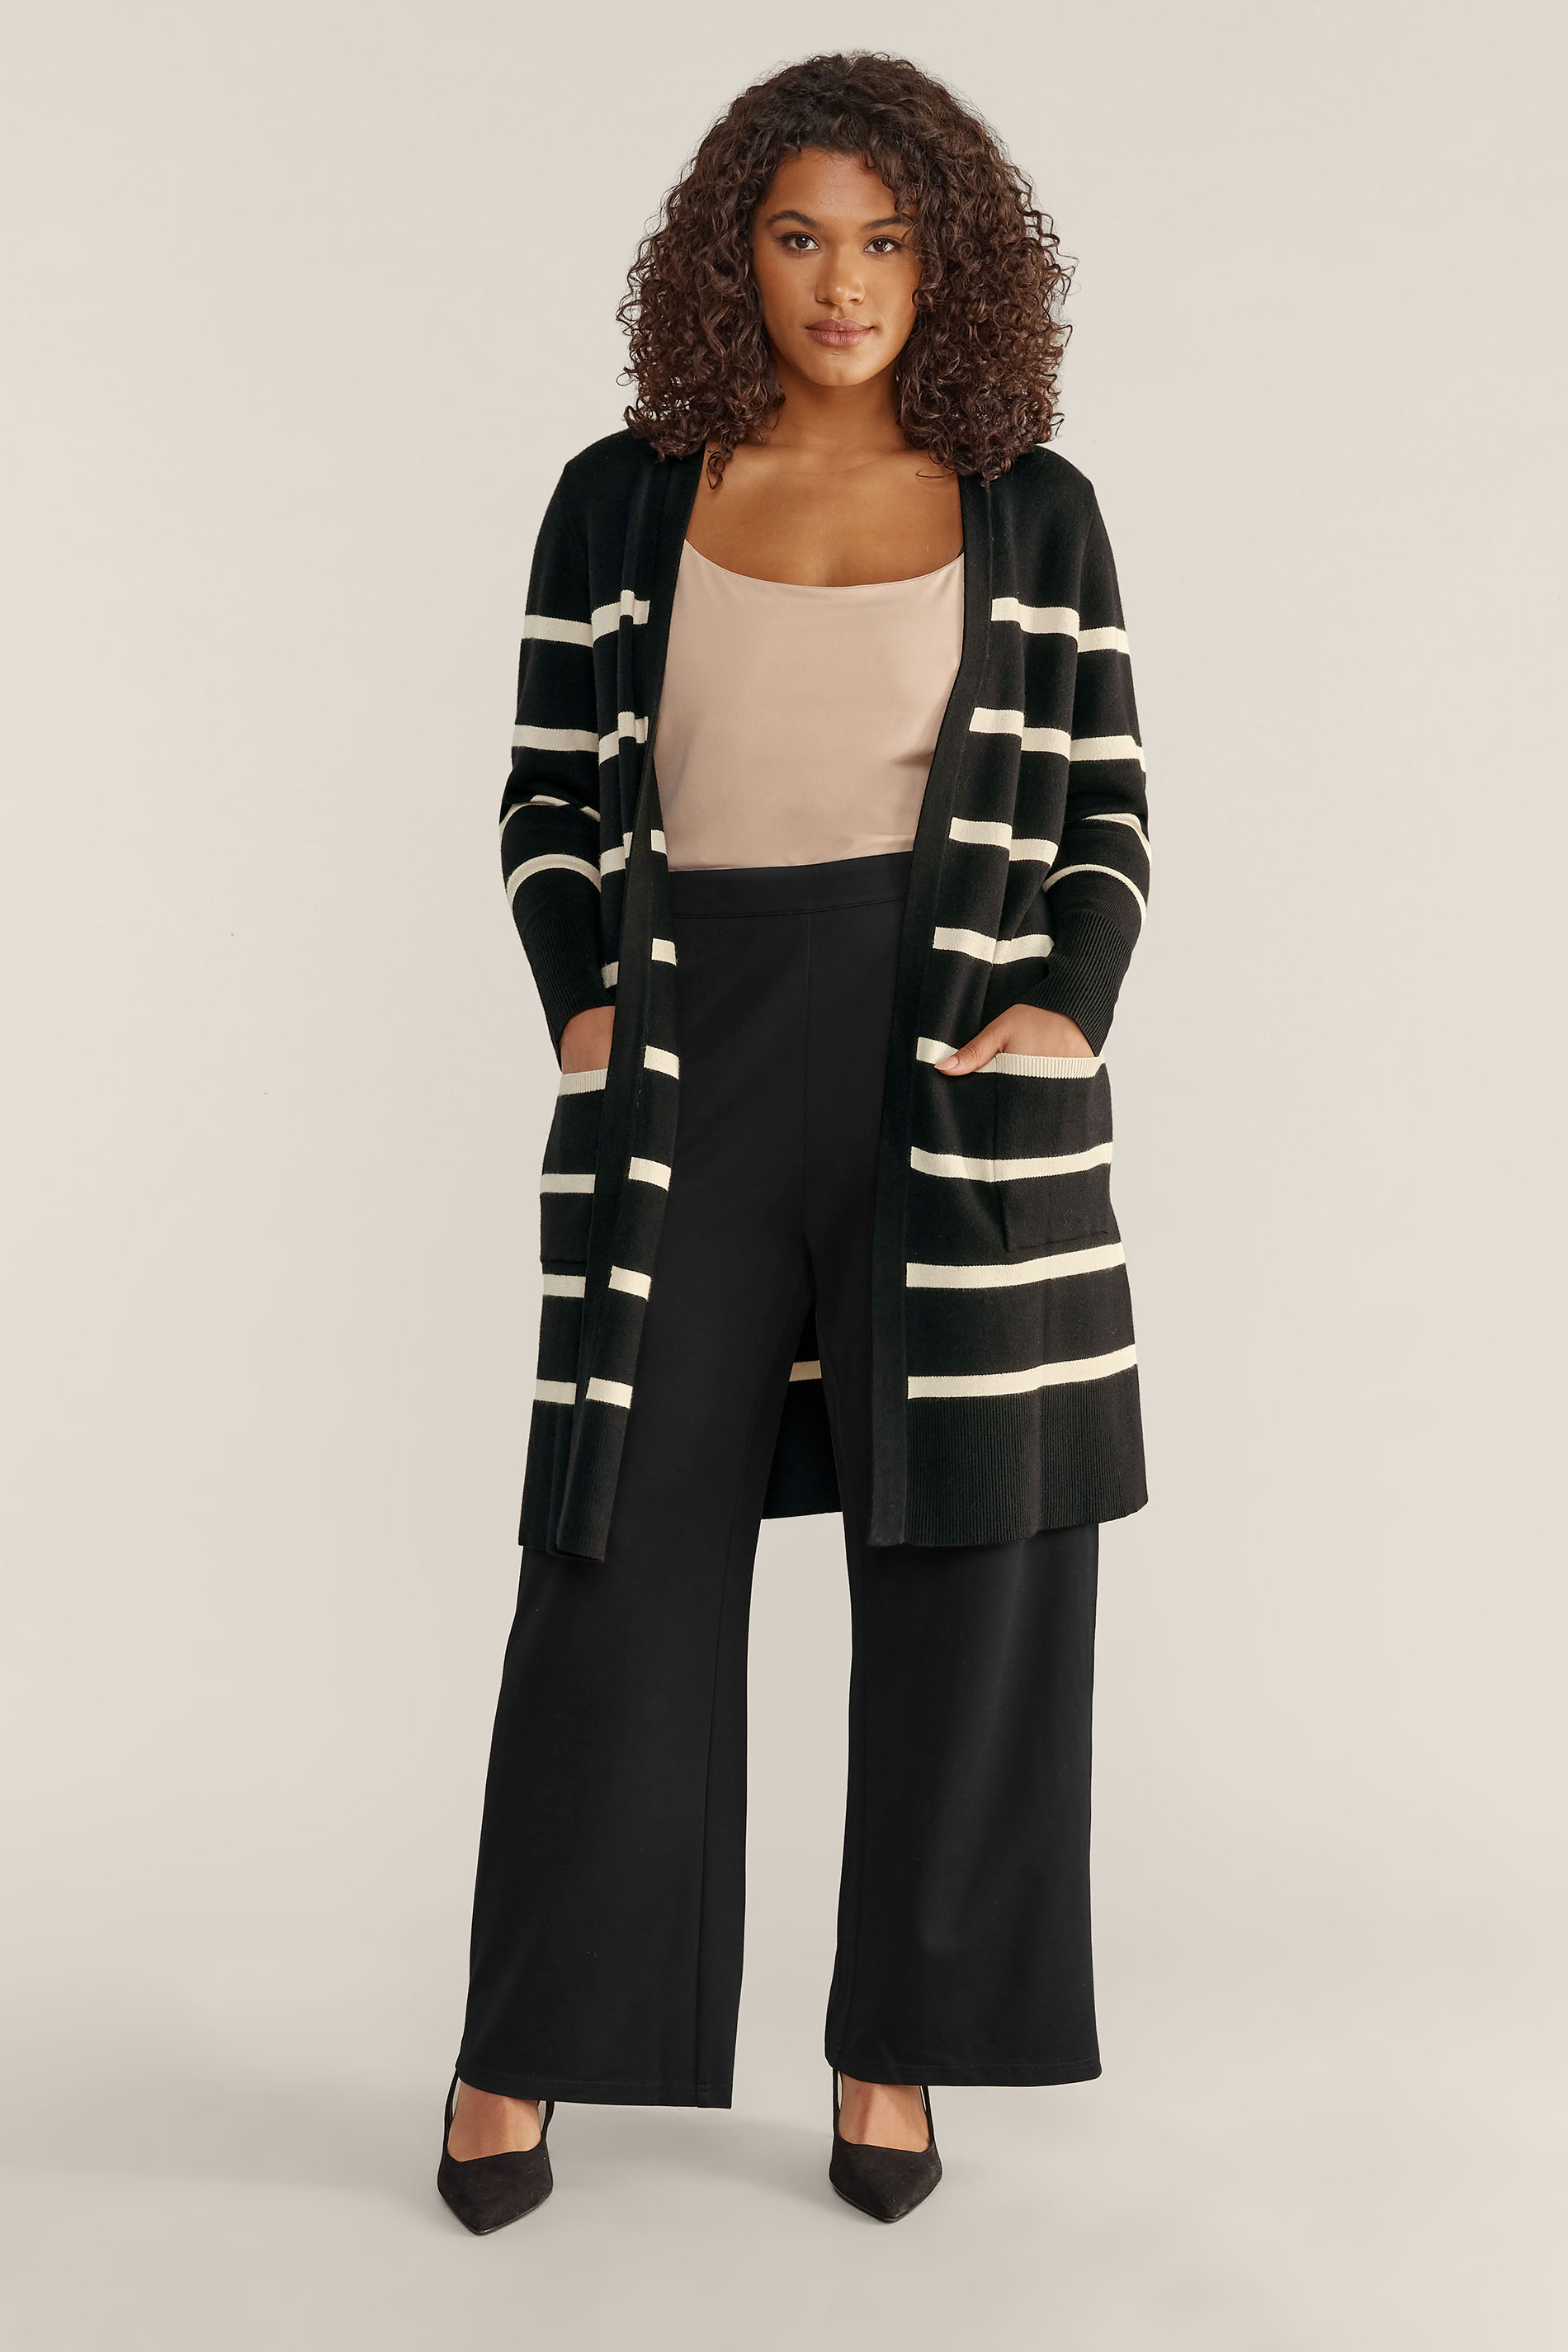 EVANS Plus Size Black & Ivory White Stripe Knitted Cardigan | Evans 2